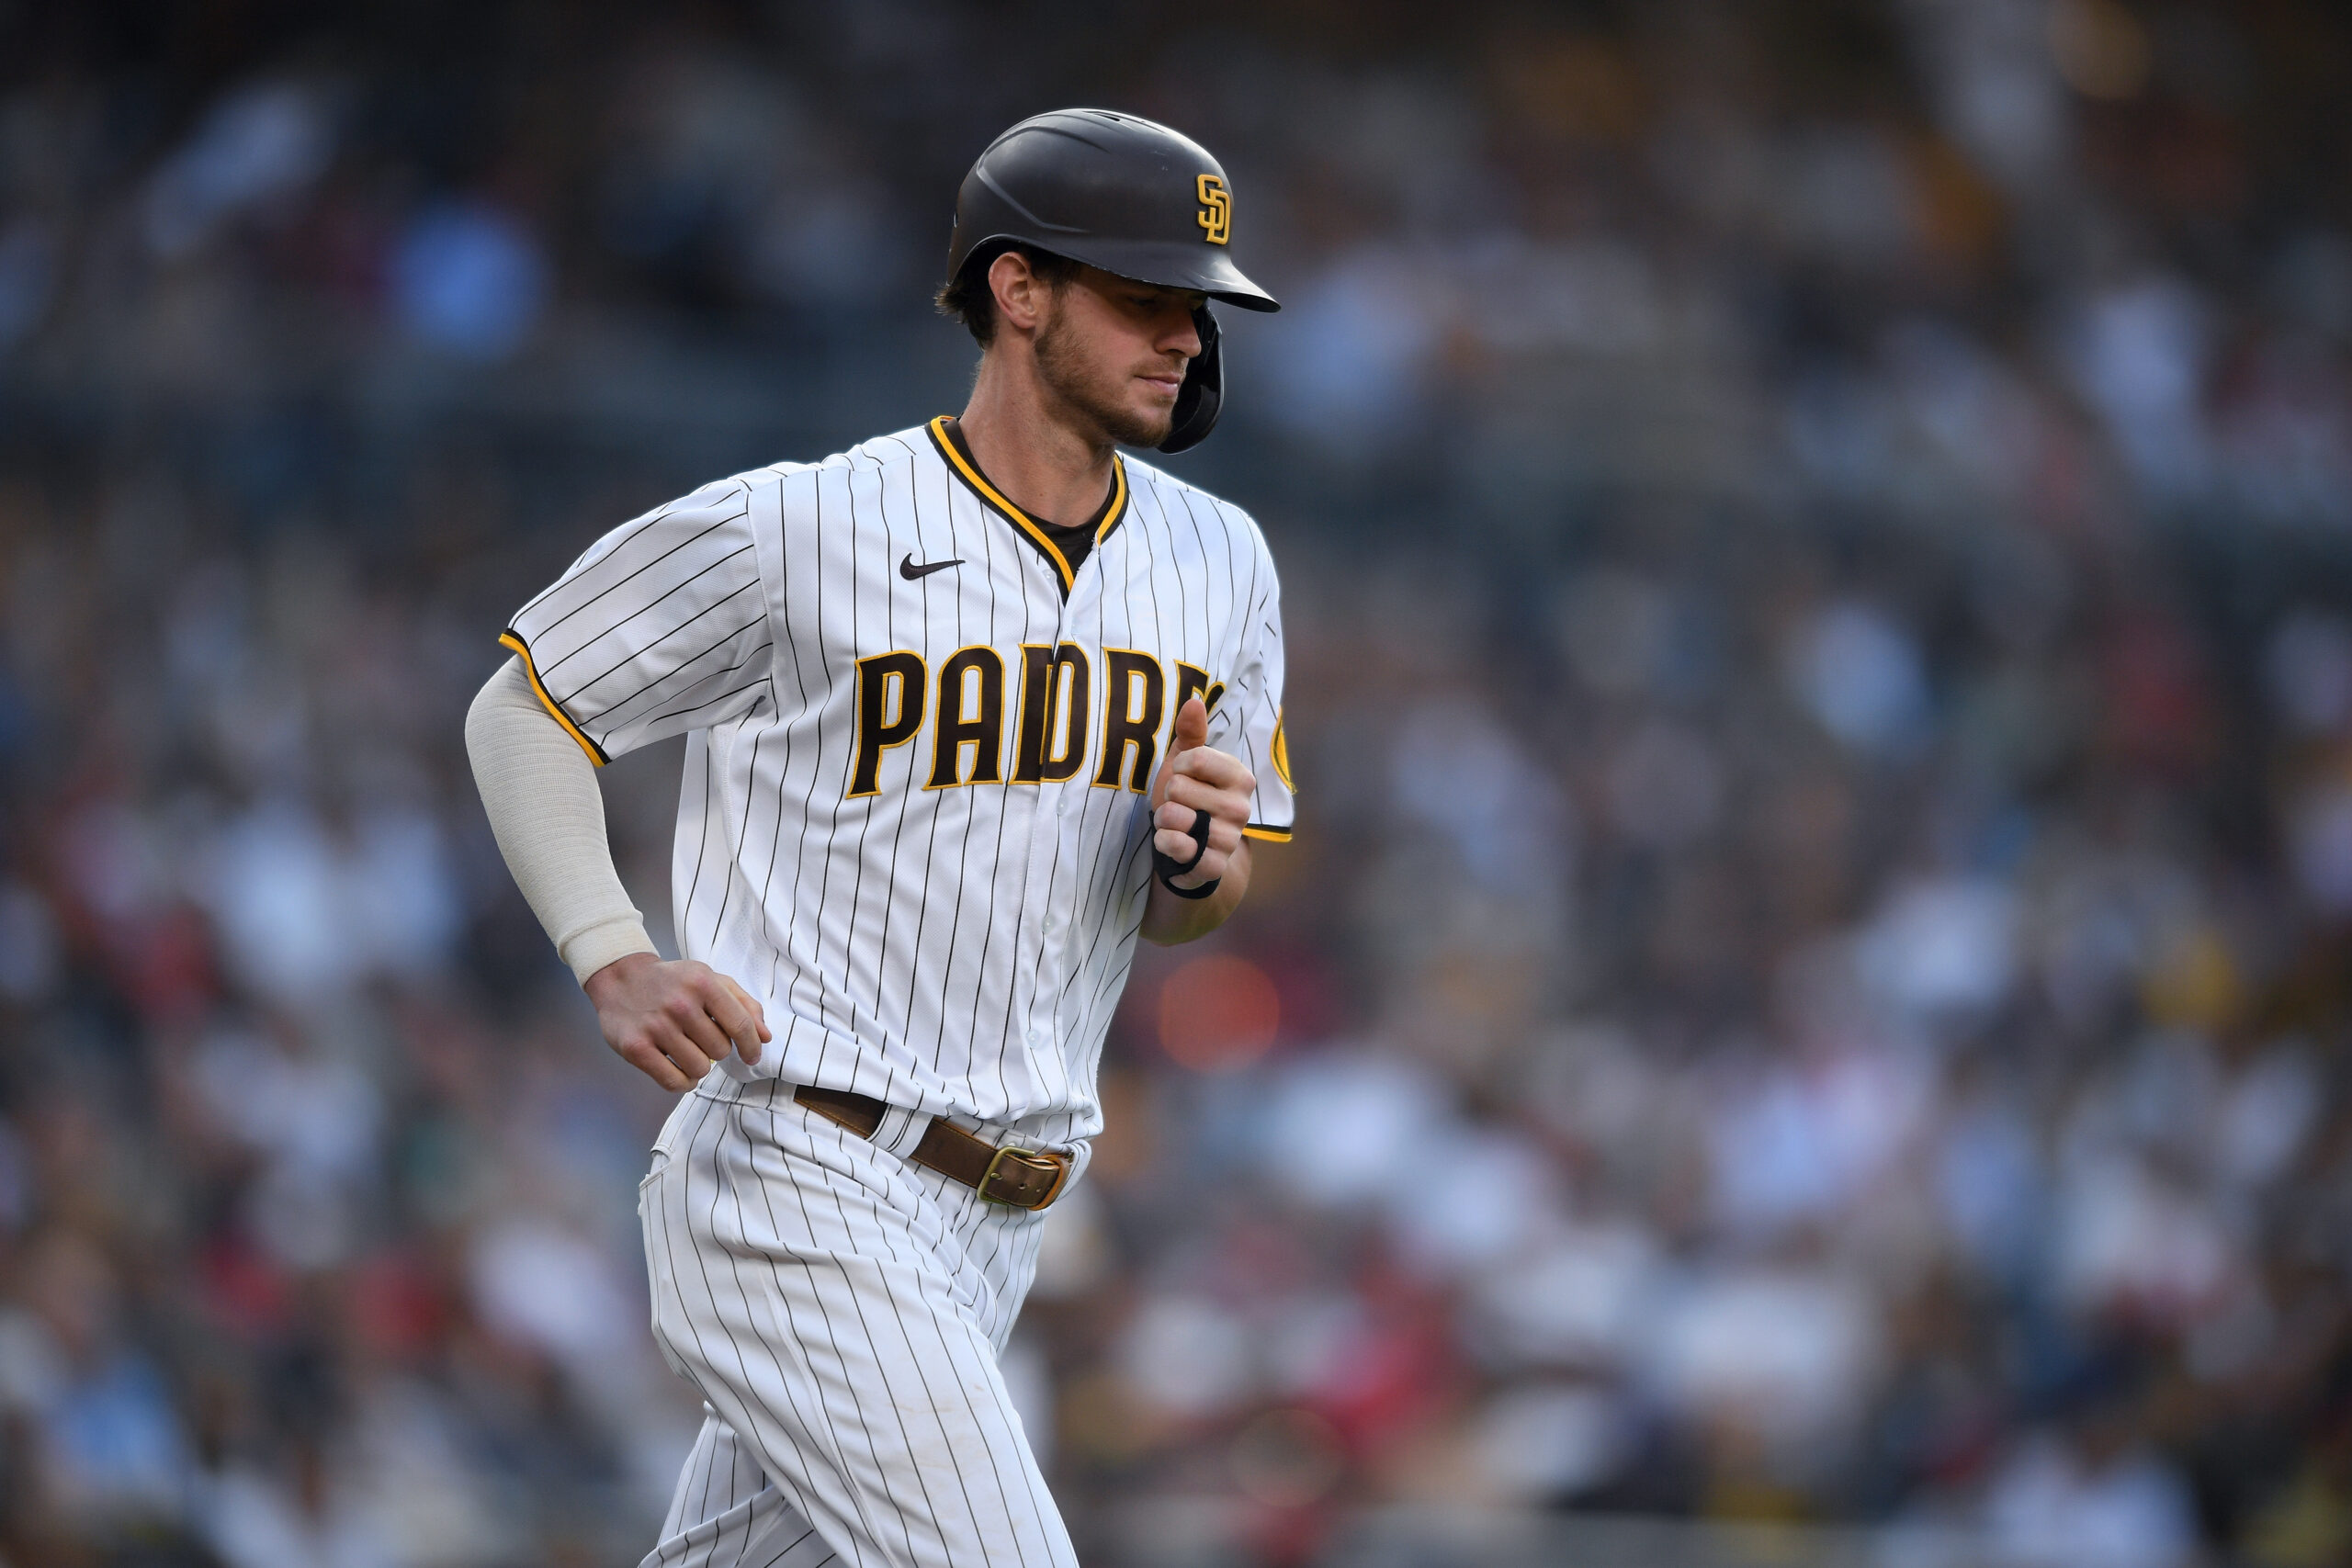 Padres' Jake Cronenworth's Michigan homecoming gave him a 'boost